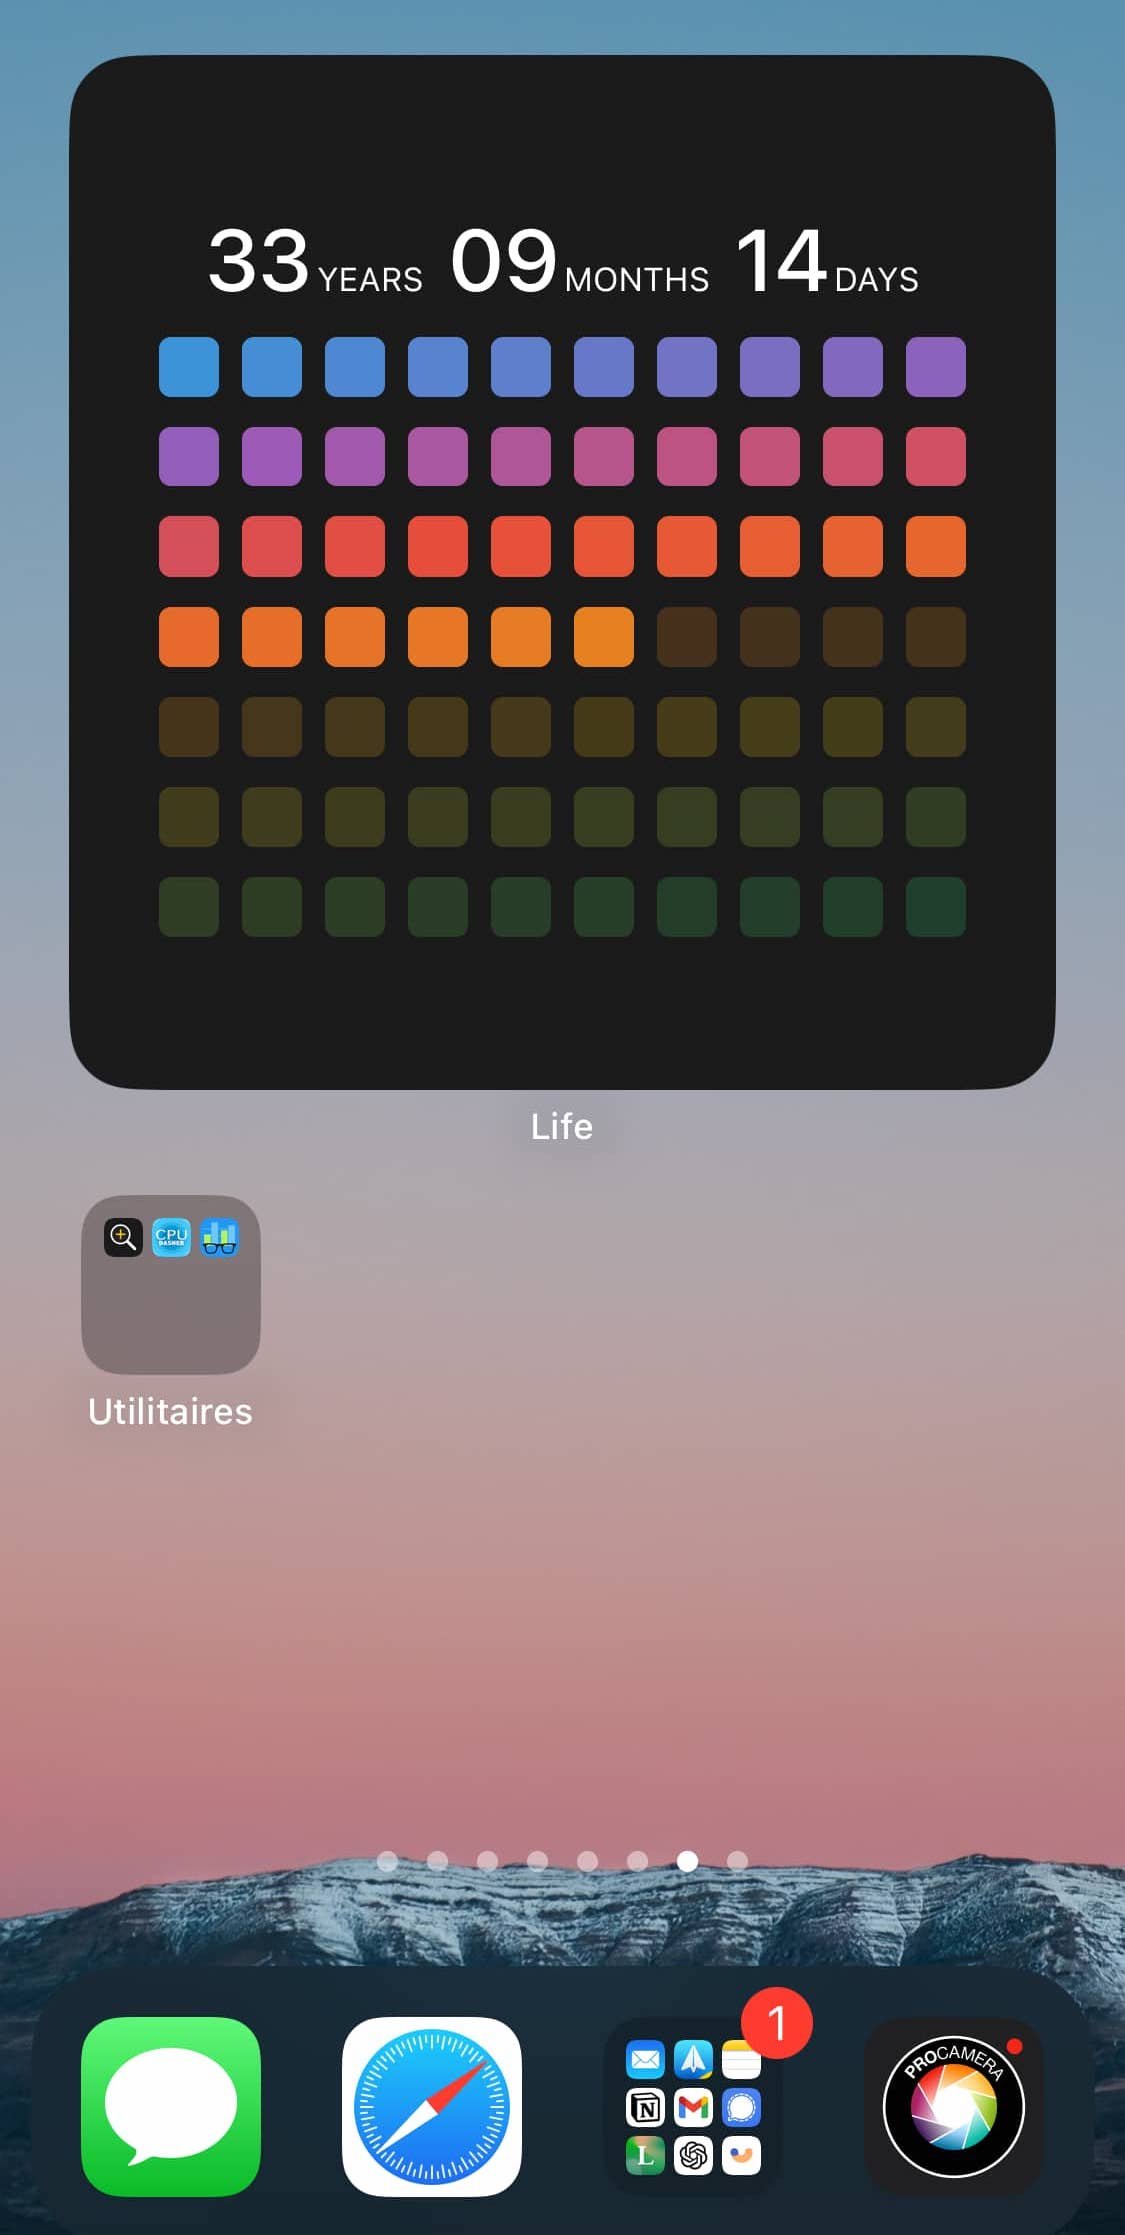 Application Life iOS